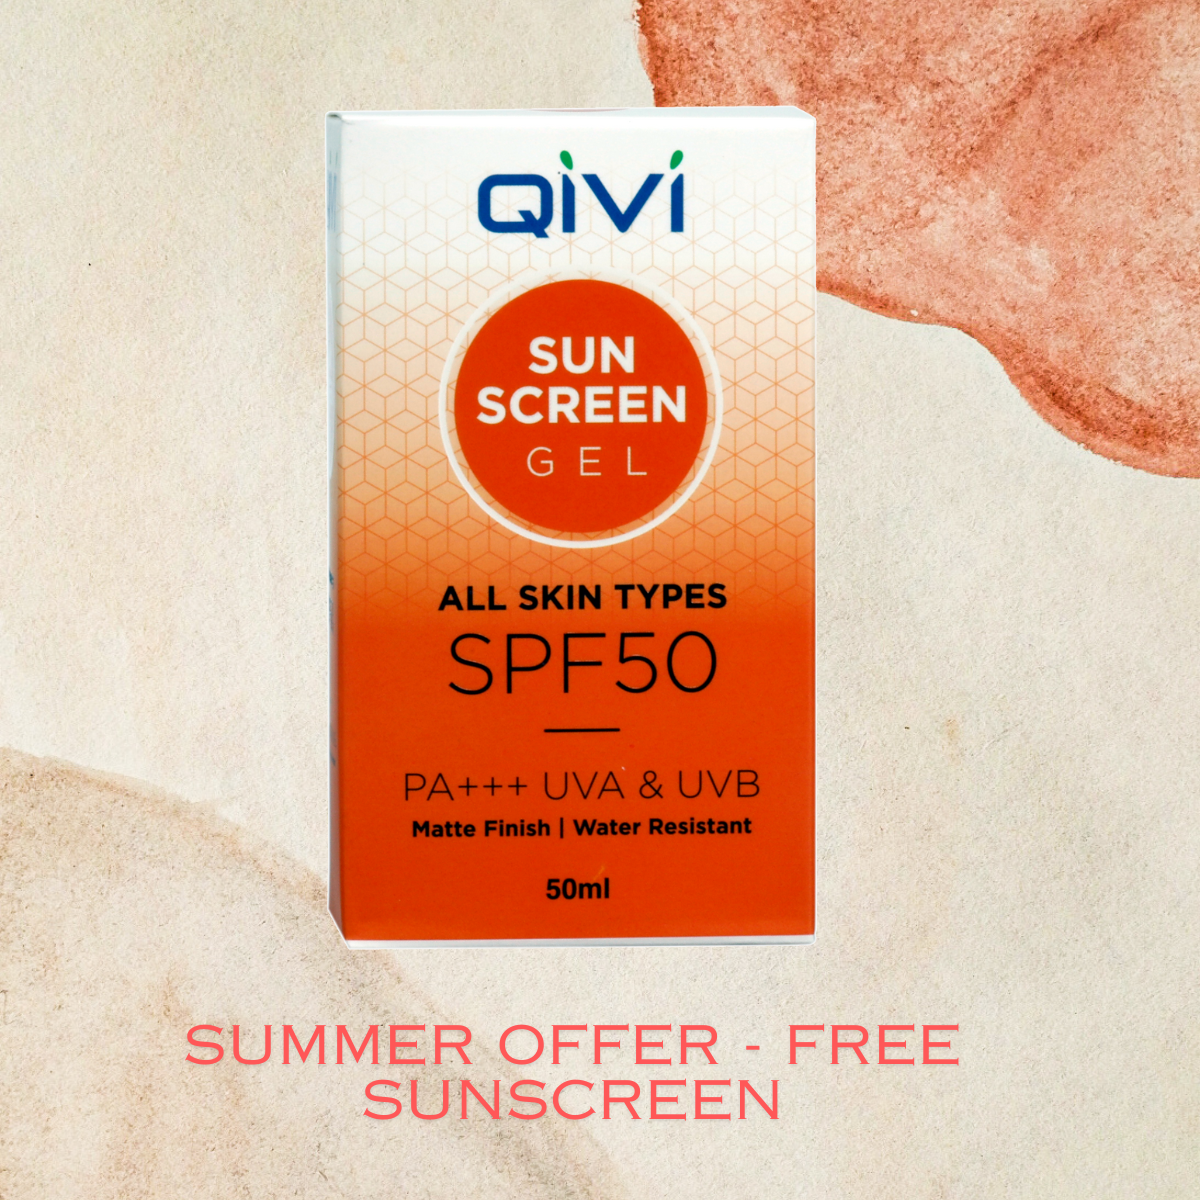 Beauty Bundle |Vitamin C Serum, Face Peel + Sunscreen FREE